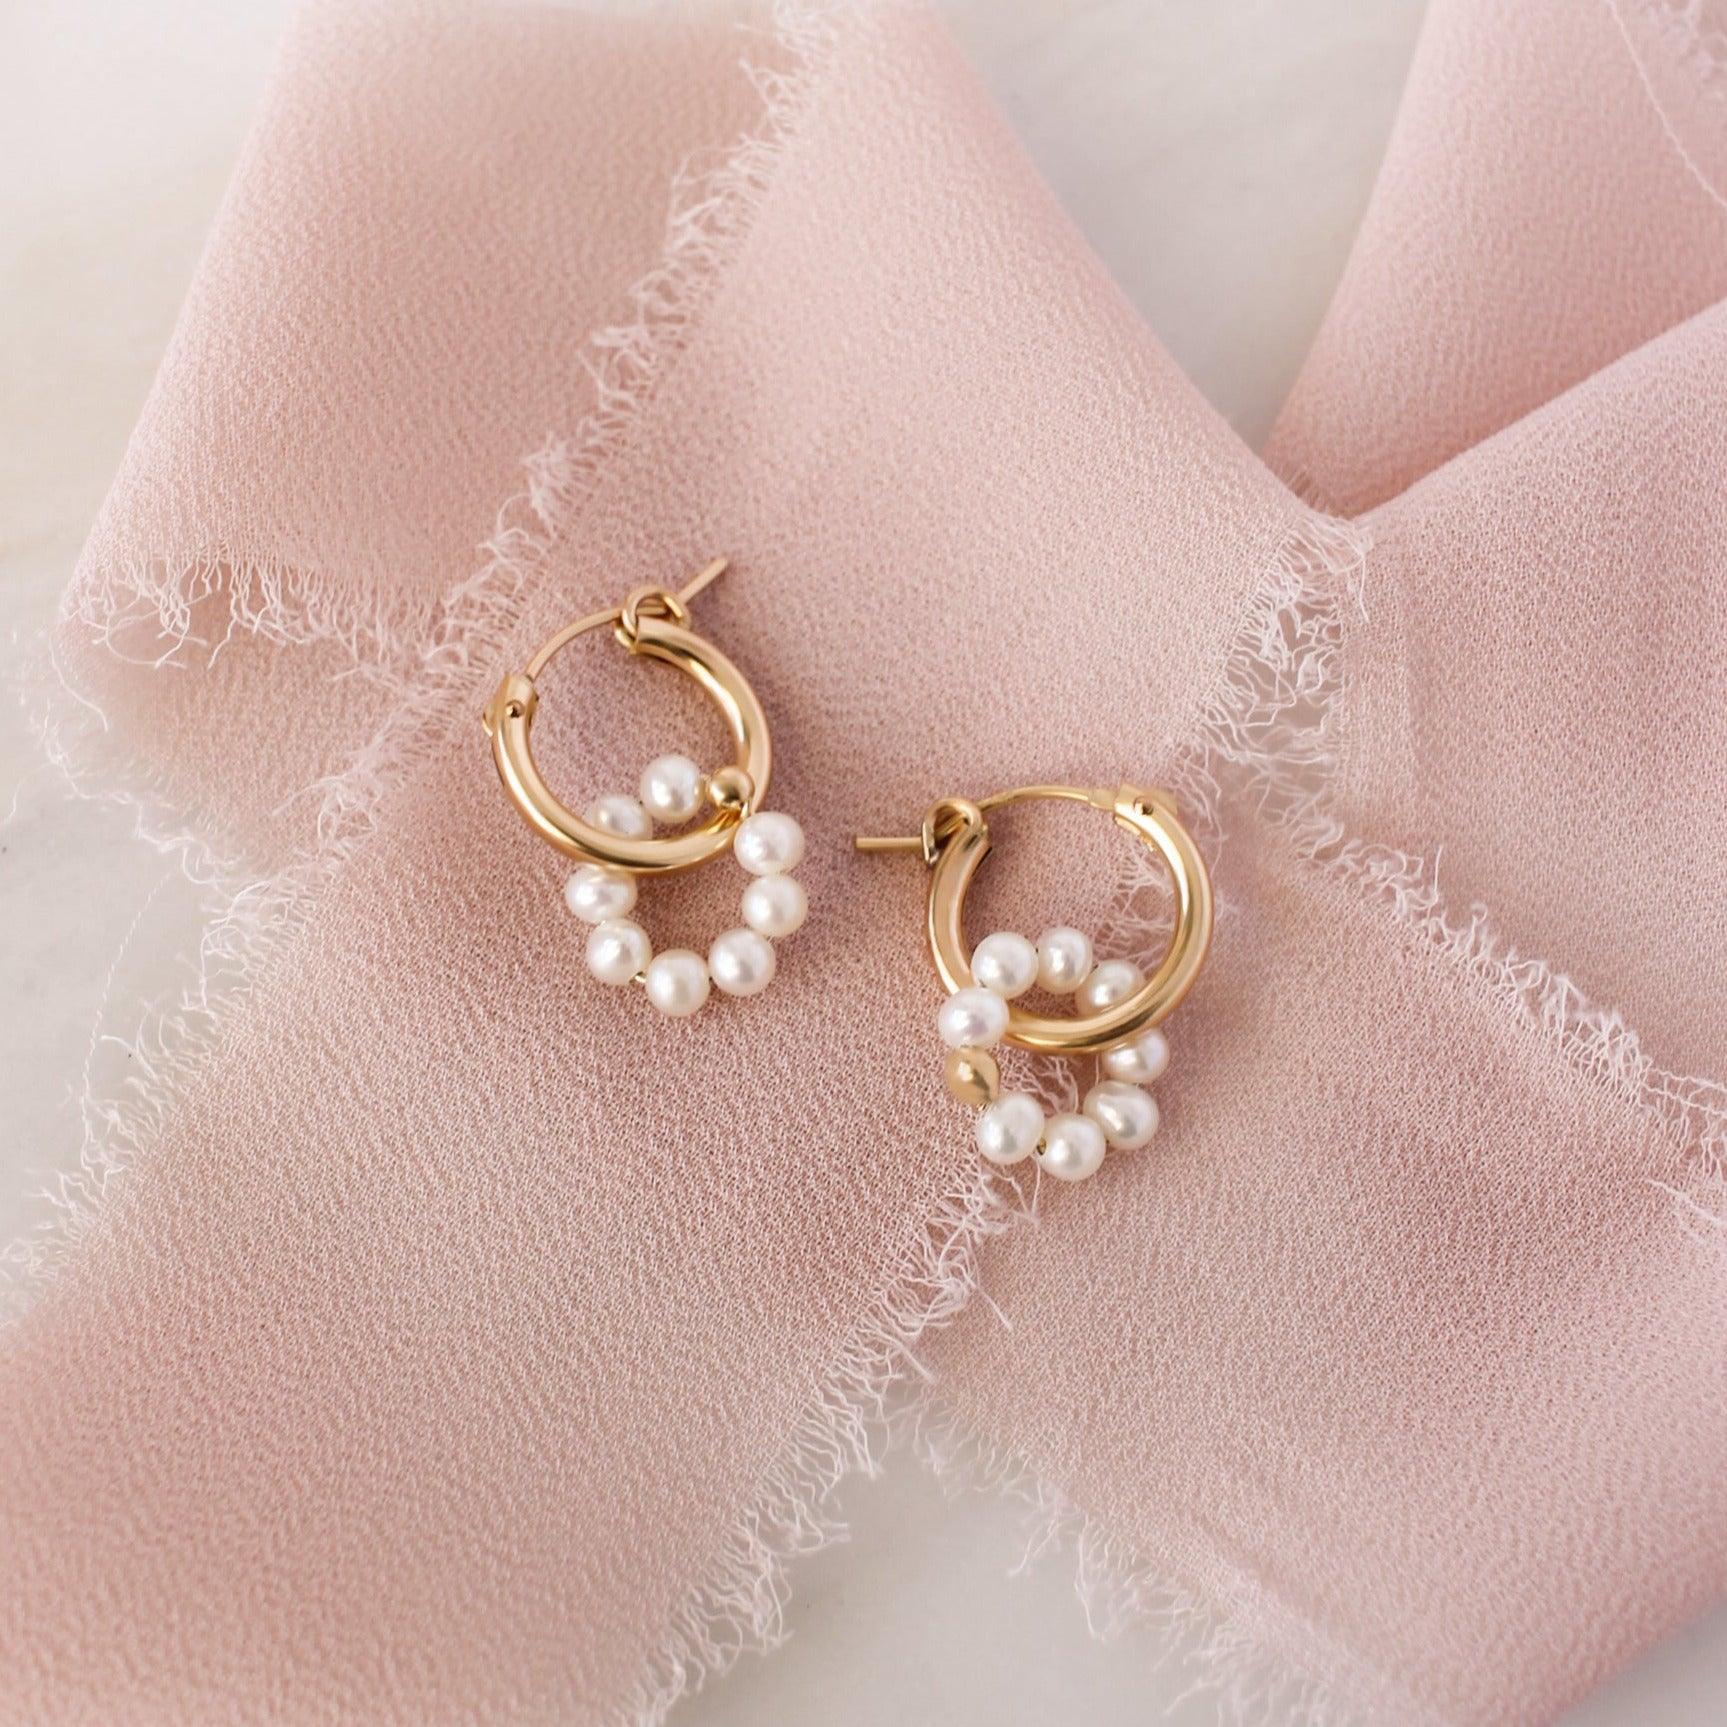 Alice Pearl Hoop Earrings - Nolia Jewelry - Meaningful + Sustainably Handcrafted Jewelry